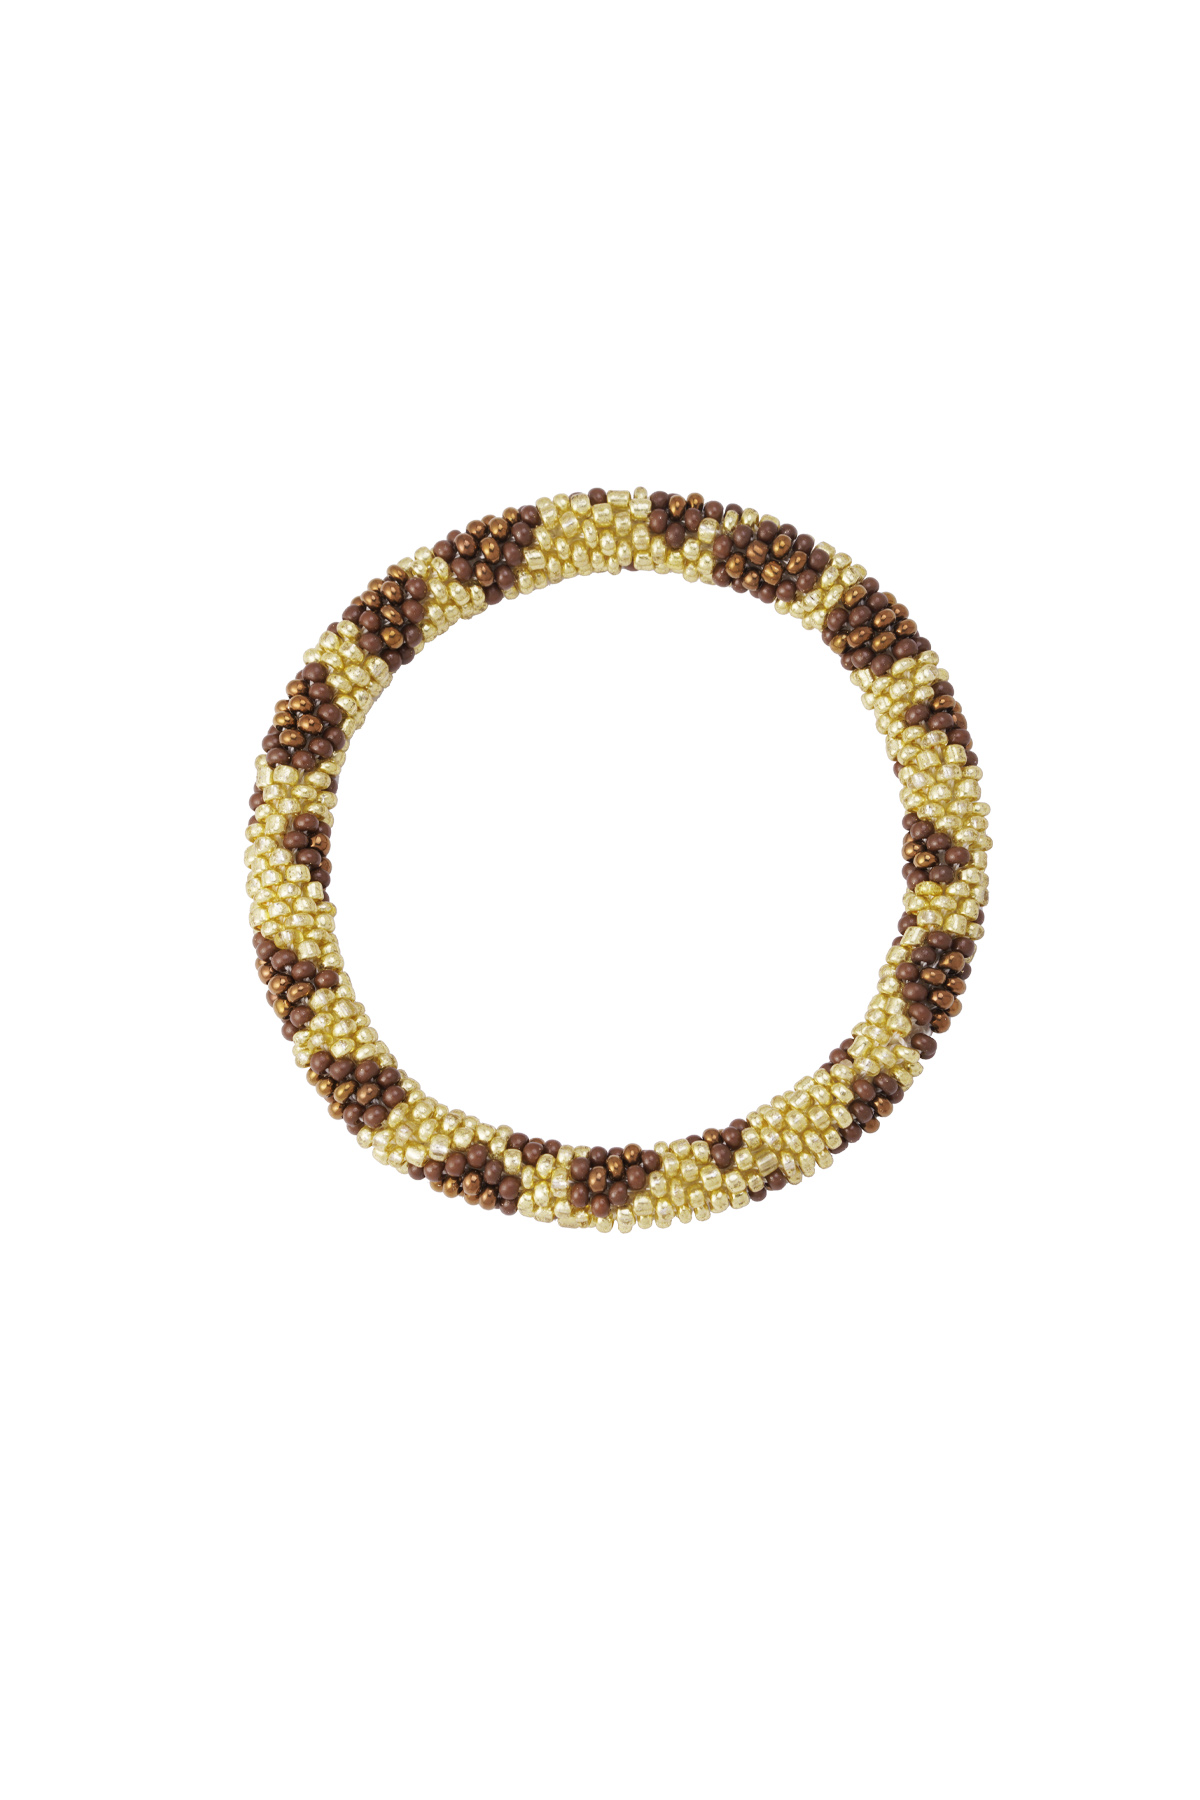 Perlenarmband Figur - gold/braun